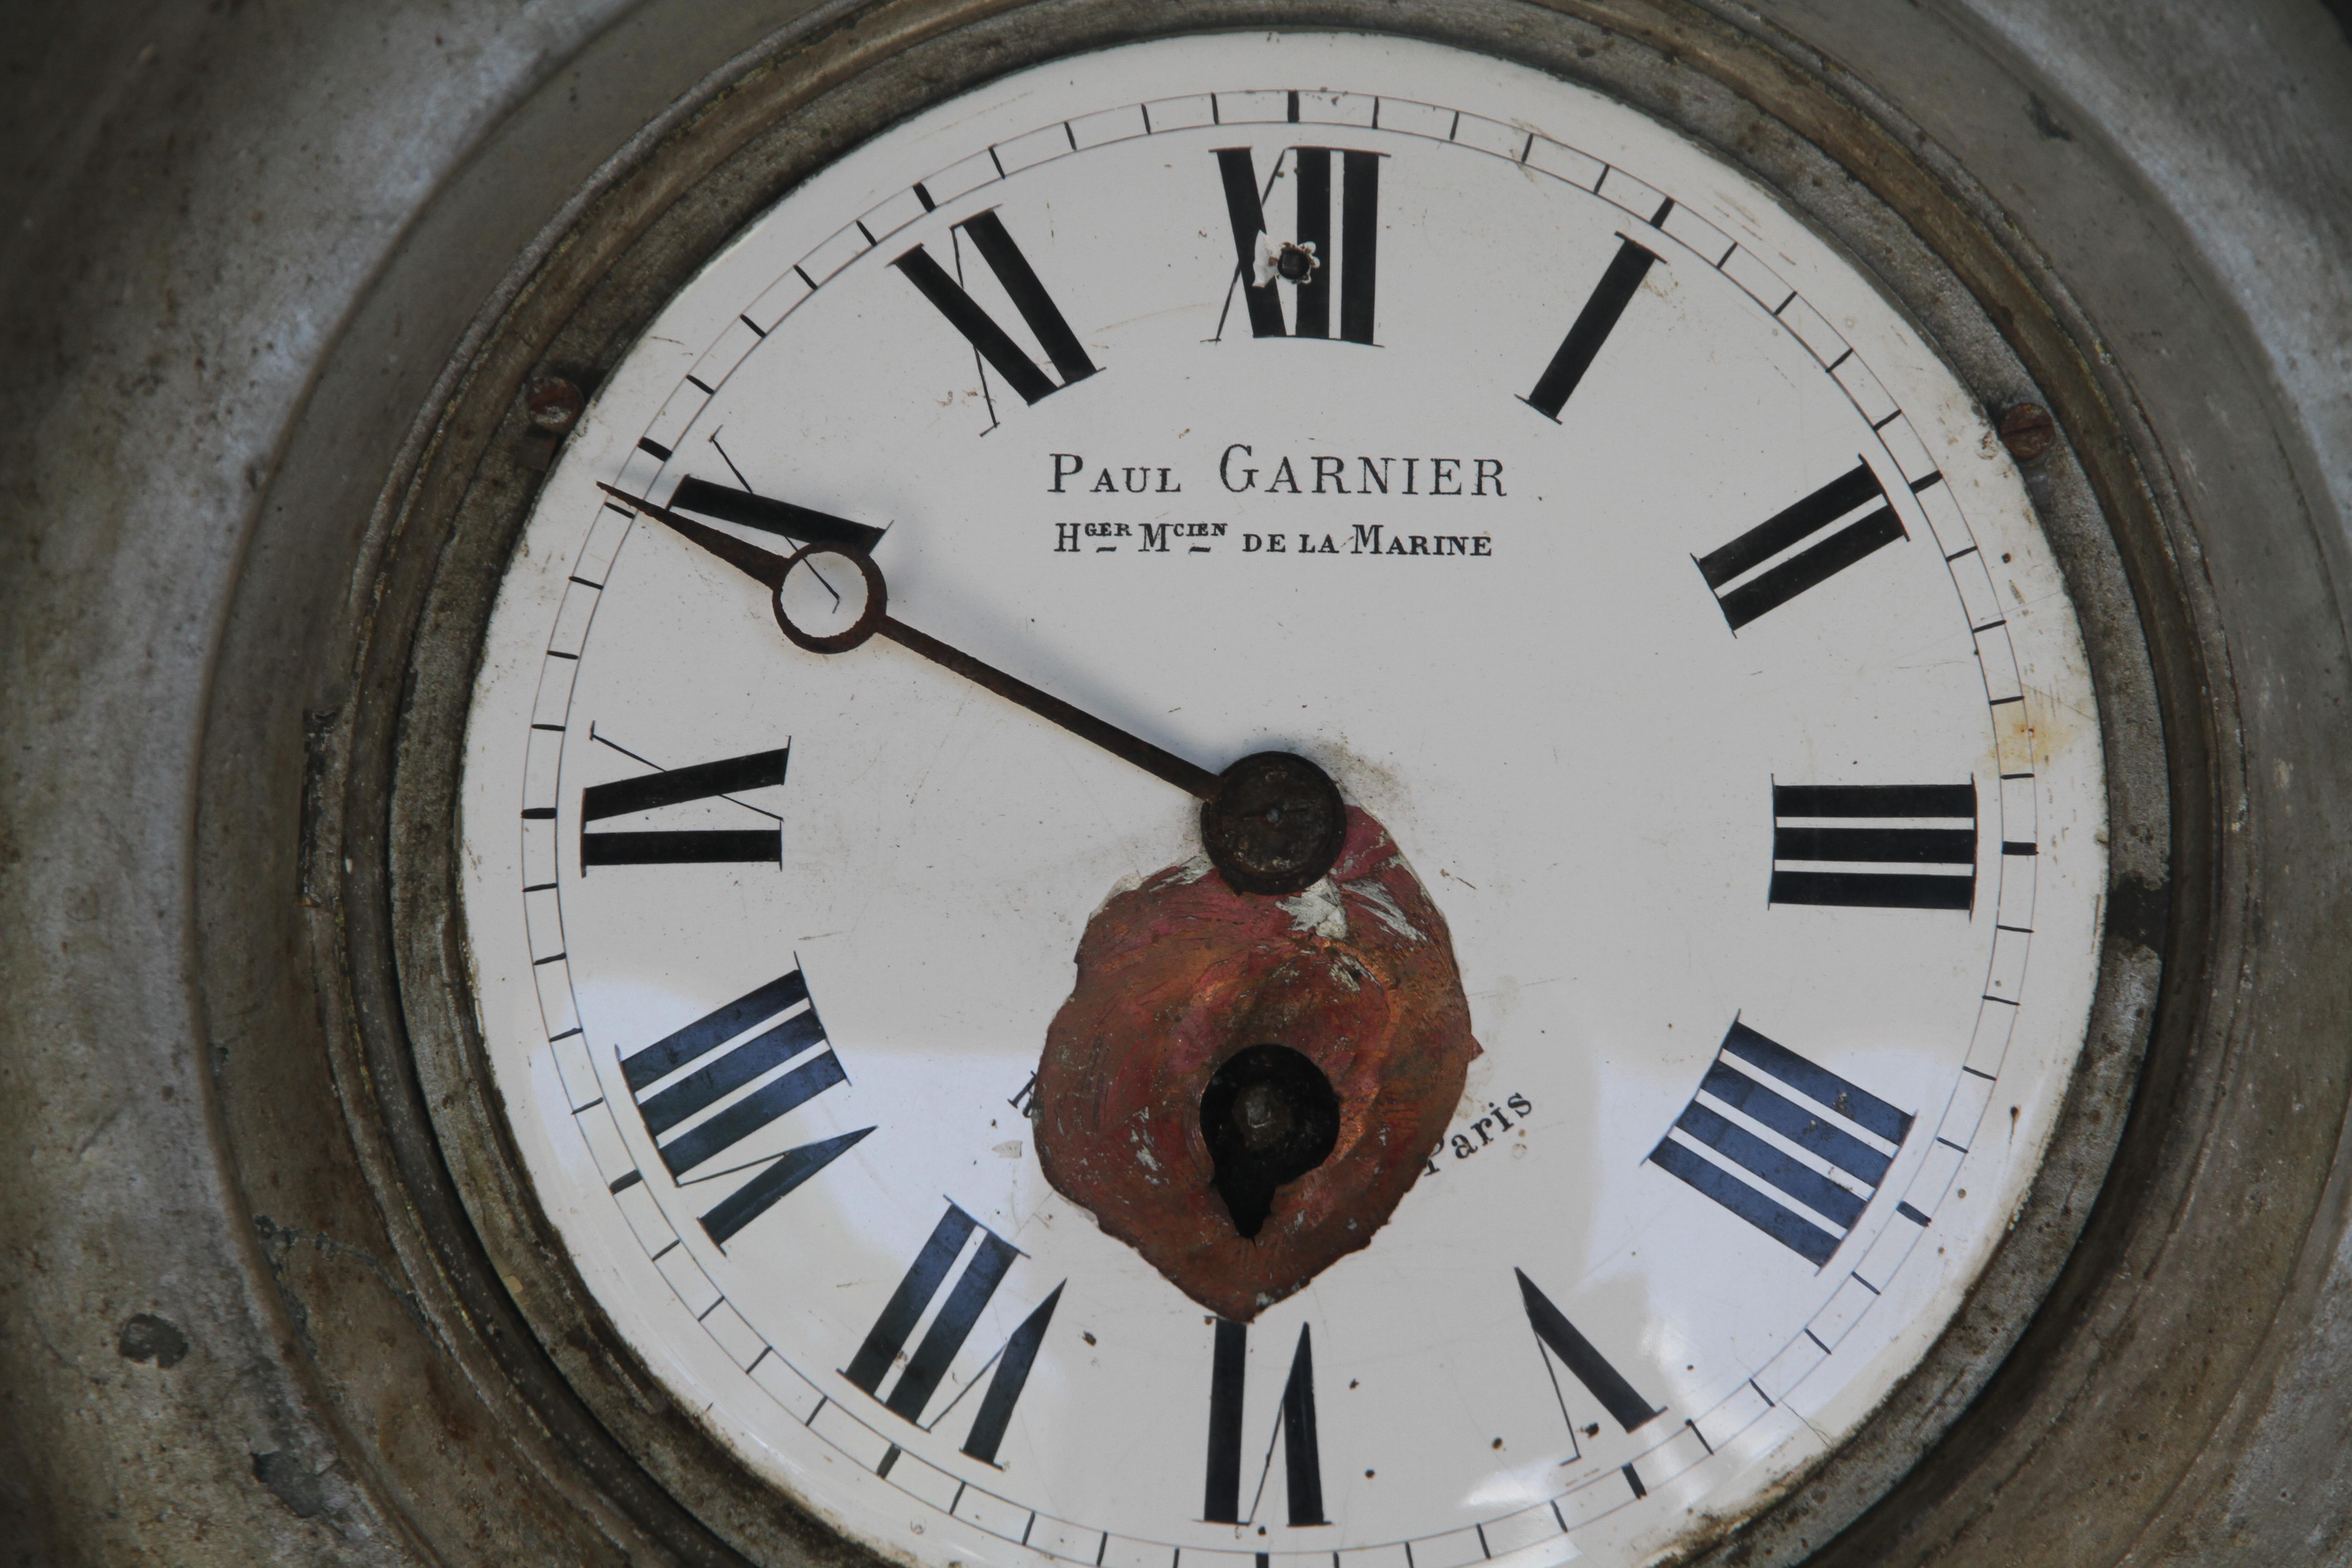 19th Century Antique French Zinc Clock, Paul Garnier, Hger Mcien de la Marine